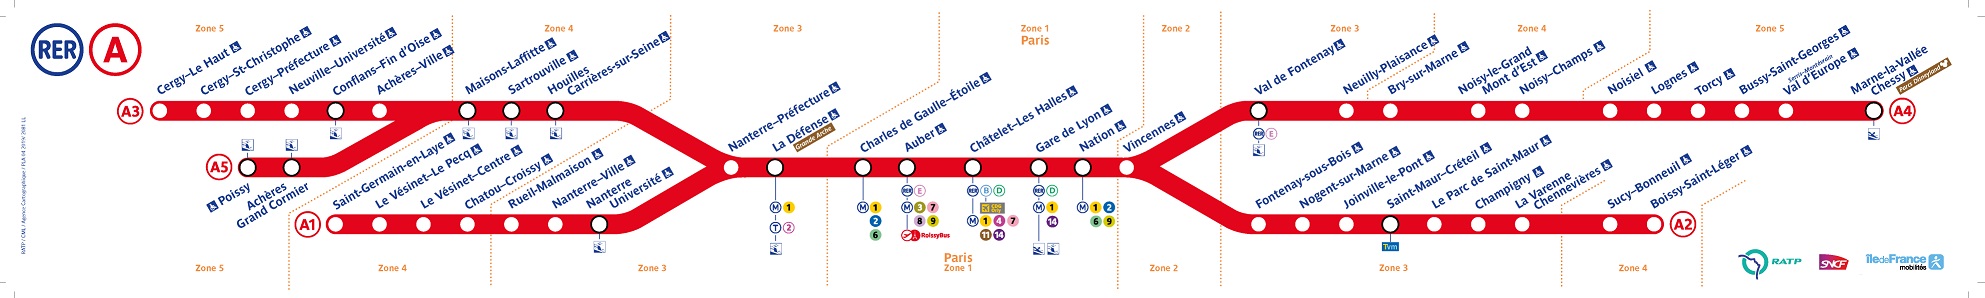 RER A map - train to Disneyland Paris - image courtesy of https://www.ratp.fr